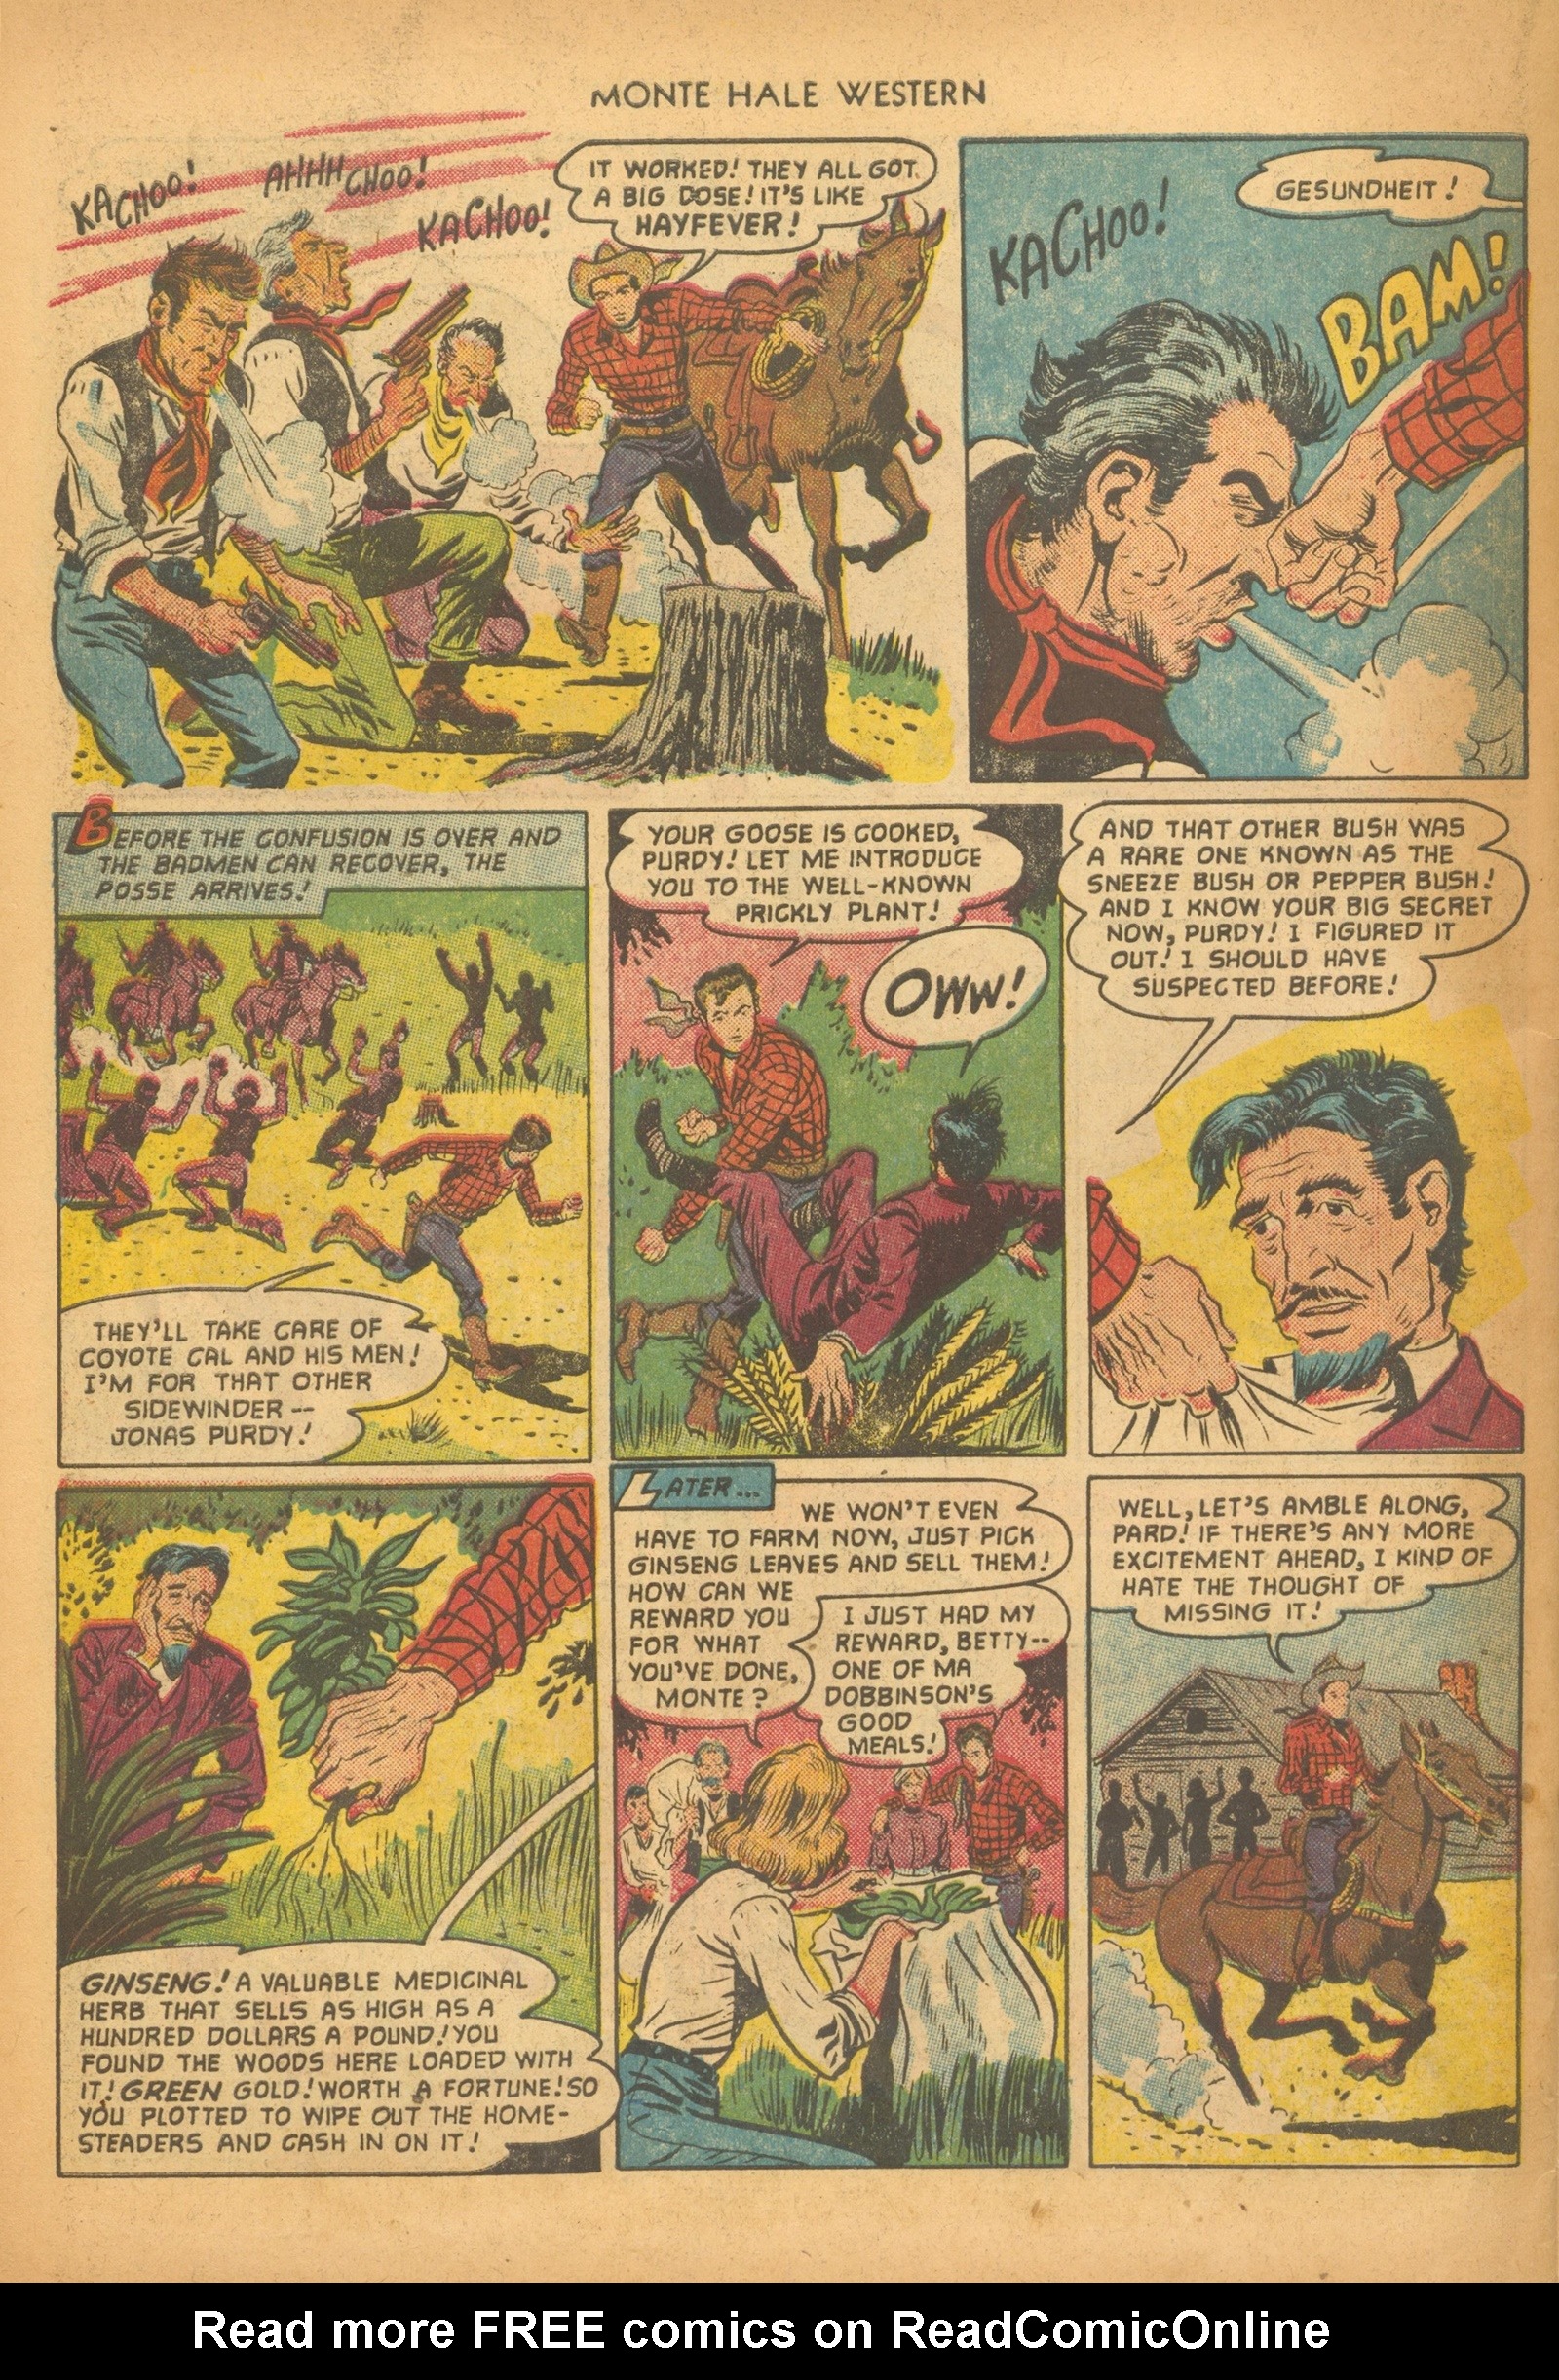 Read online Monte Hale Western comic -  Issue #73 - 34